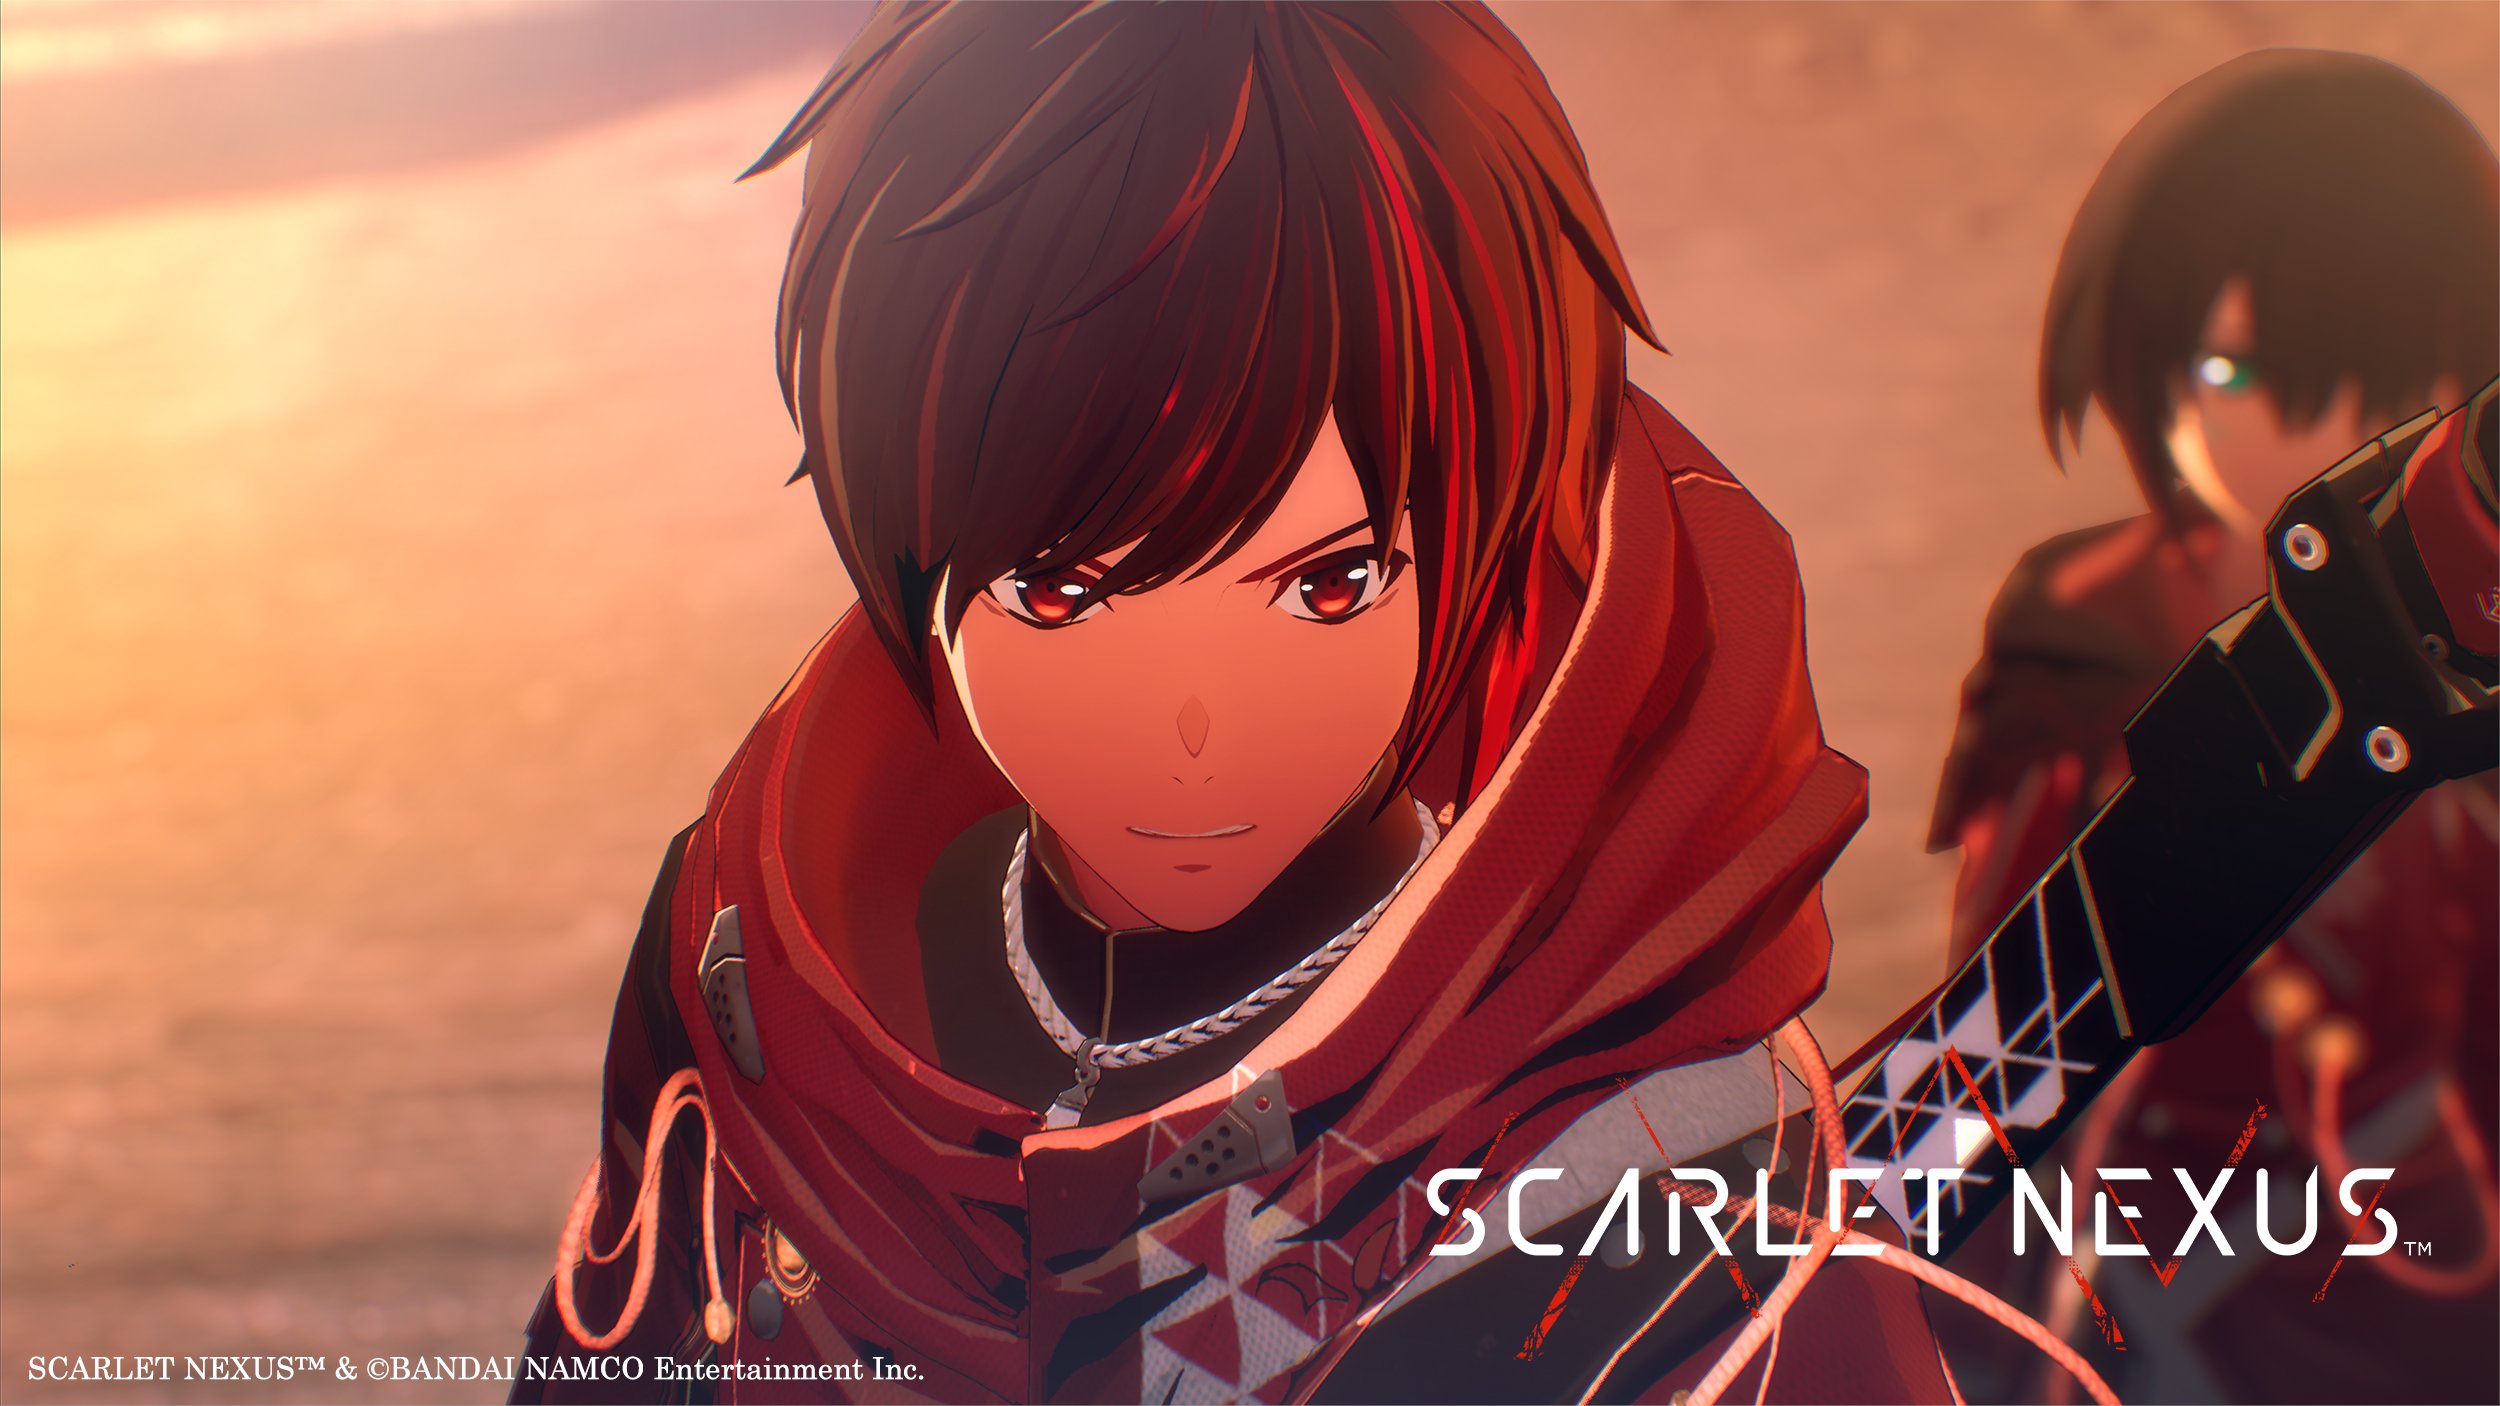 Twitter 上的 公式 Scarlet Nexus Scarlet Nexus Deluxe Edition 赤ノ装束 全キャラセット 黒を基調とした怪異討伐軍の戦闘服デザインに対し 赤を基調としたクールな正装をイメージした 新規オリジナル衣装セット 主人公に加え仲間キャラクター達の衣装も付属